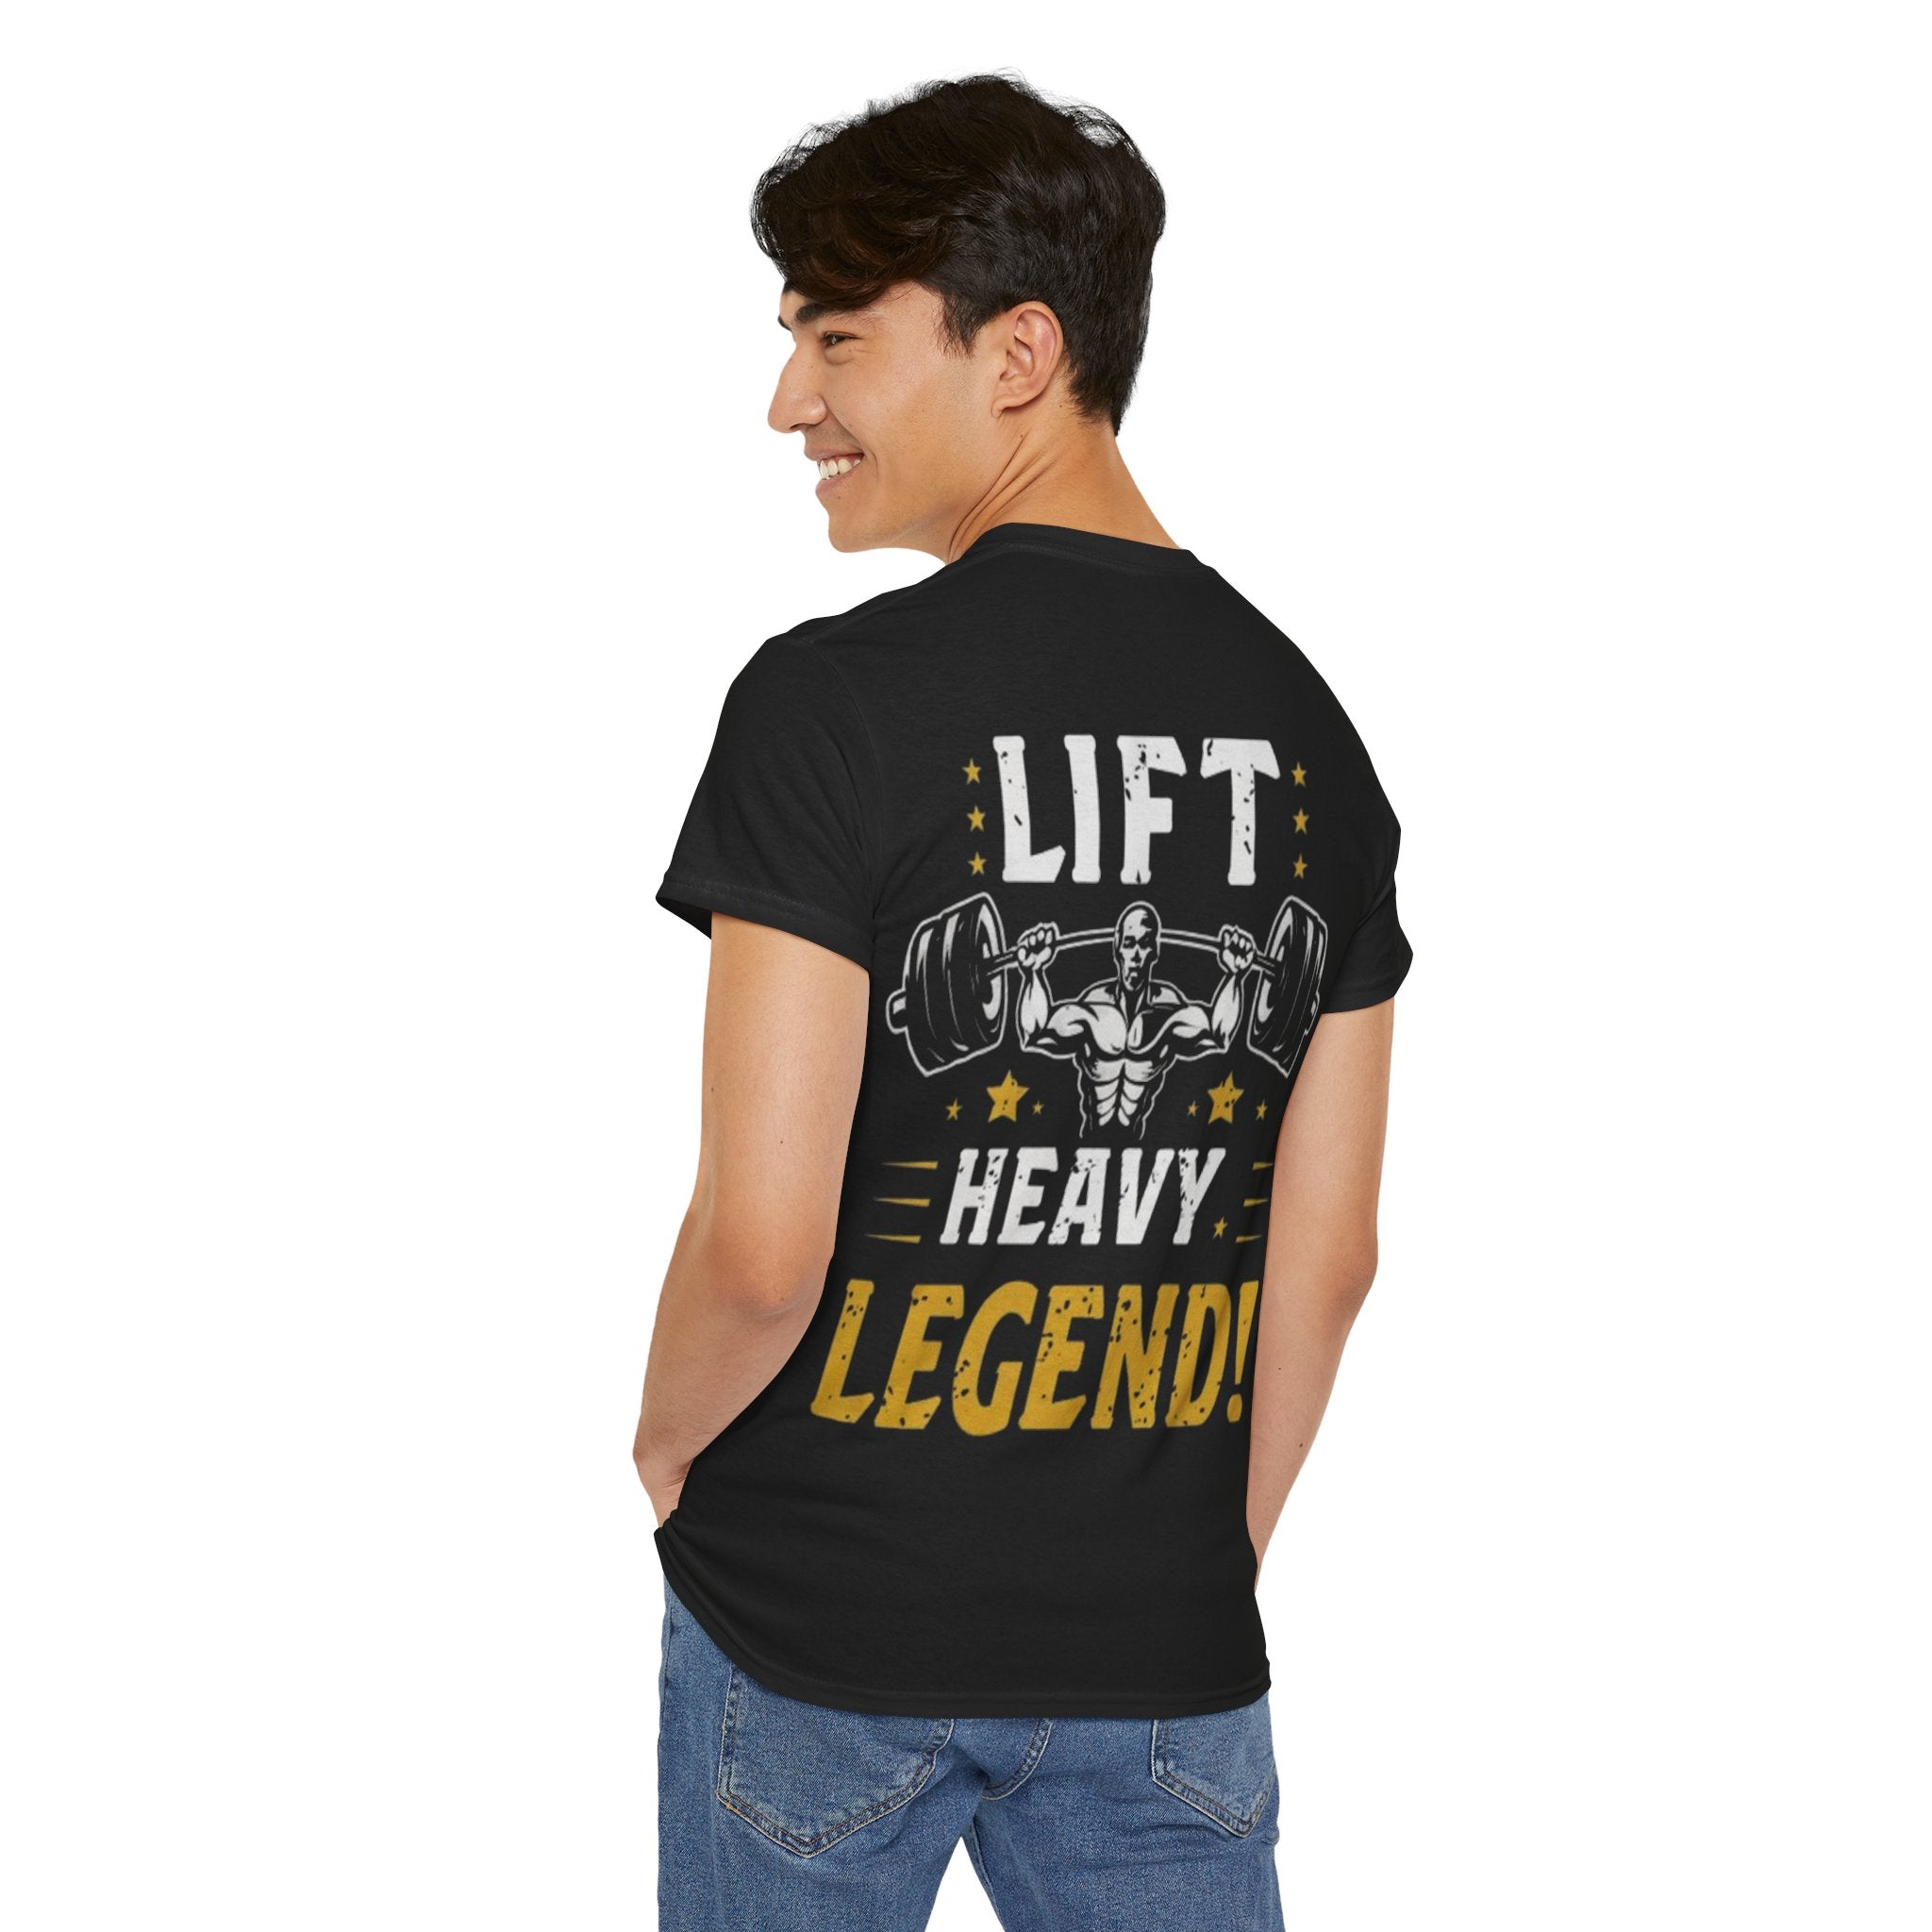 Lift Heavy Legend